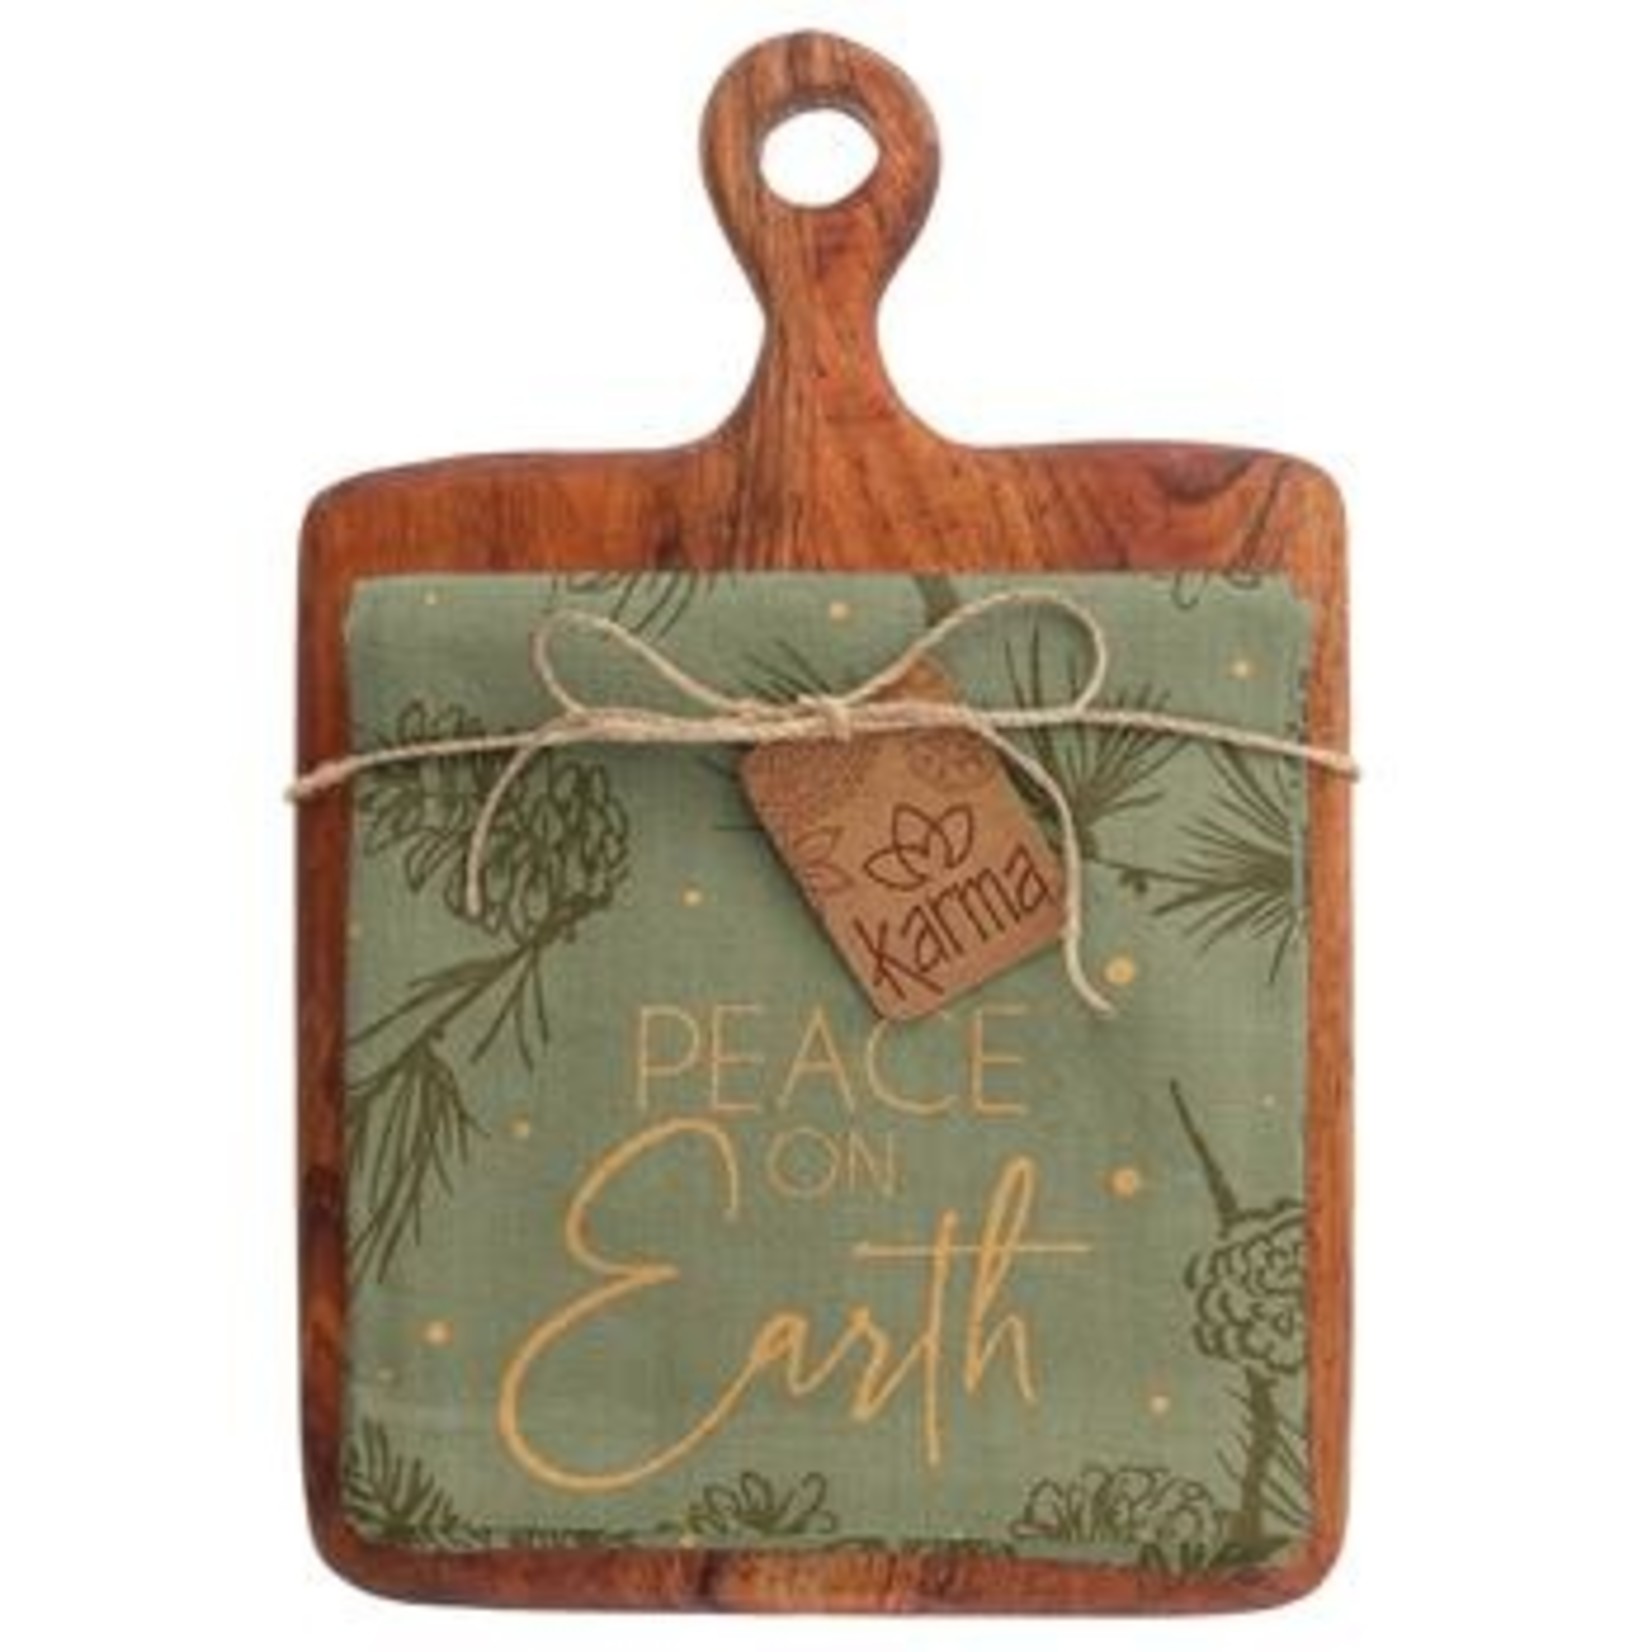 Cutting Board and Peace on Earth Tea Towel